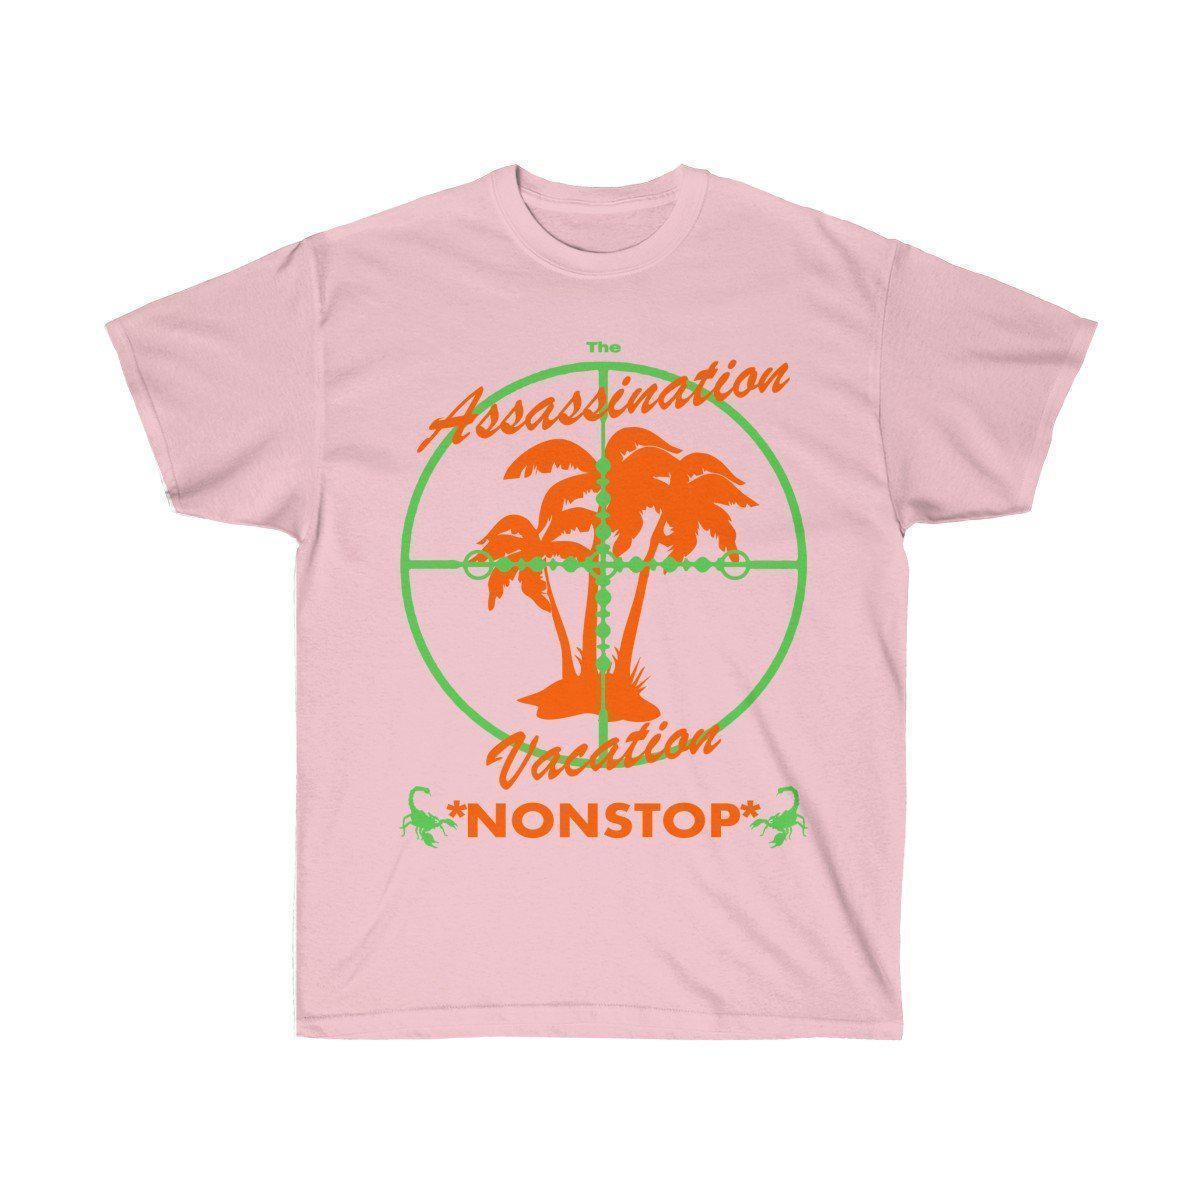 Assassination Vacation Tour Drake merch inspired - Unisex Ultra Cotton Tee-Light Pink-S-Archethype